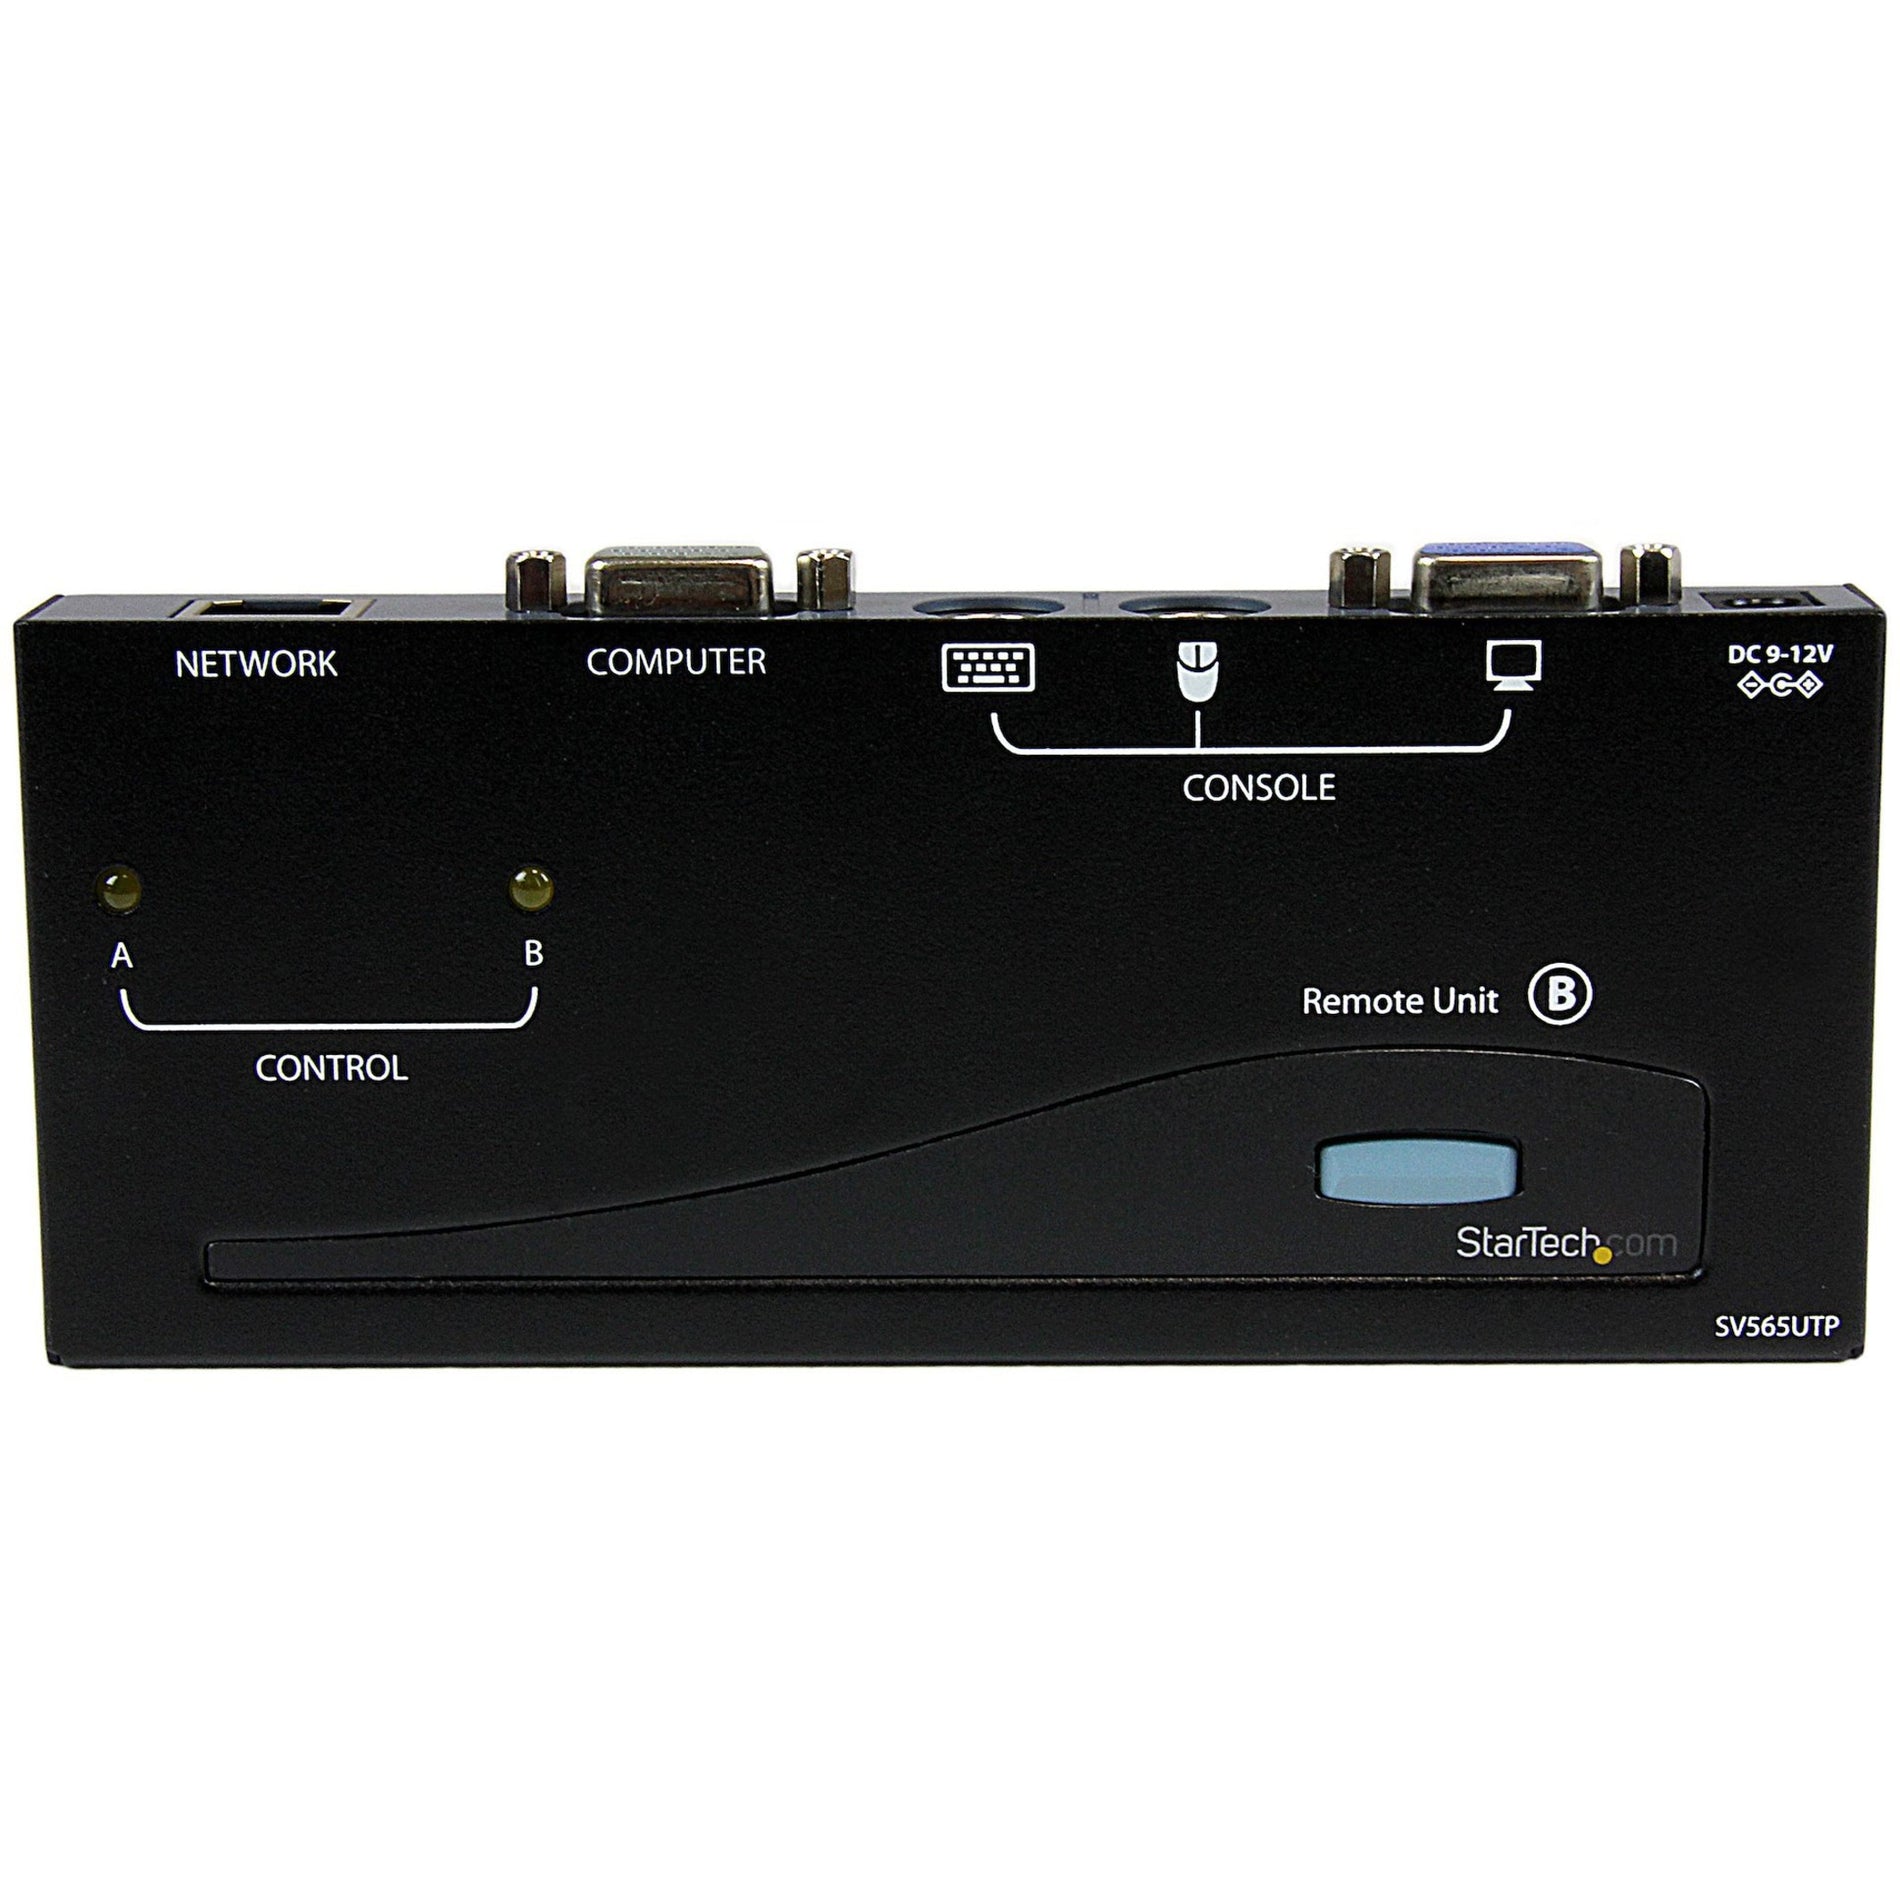 StarTech.com SV565UTP PS/2 USB KVM Console Extender VGA 1024 x 768 2 Year Warranty TAA Compliant 500 ft (150M) [Discontinued]